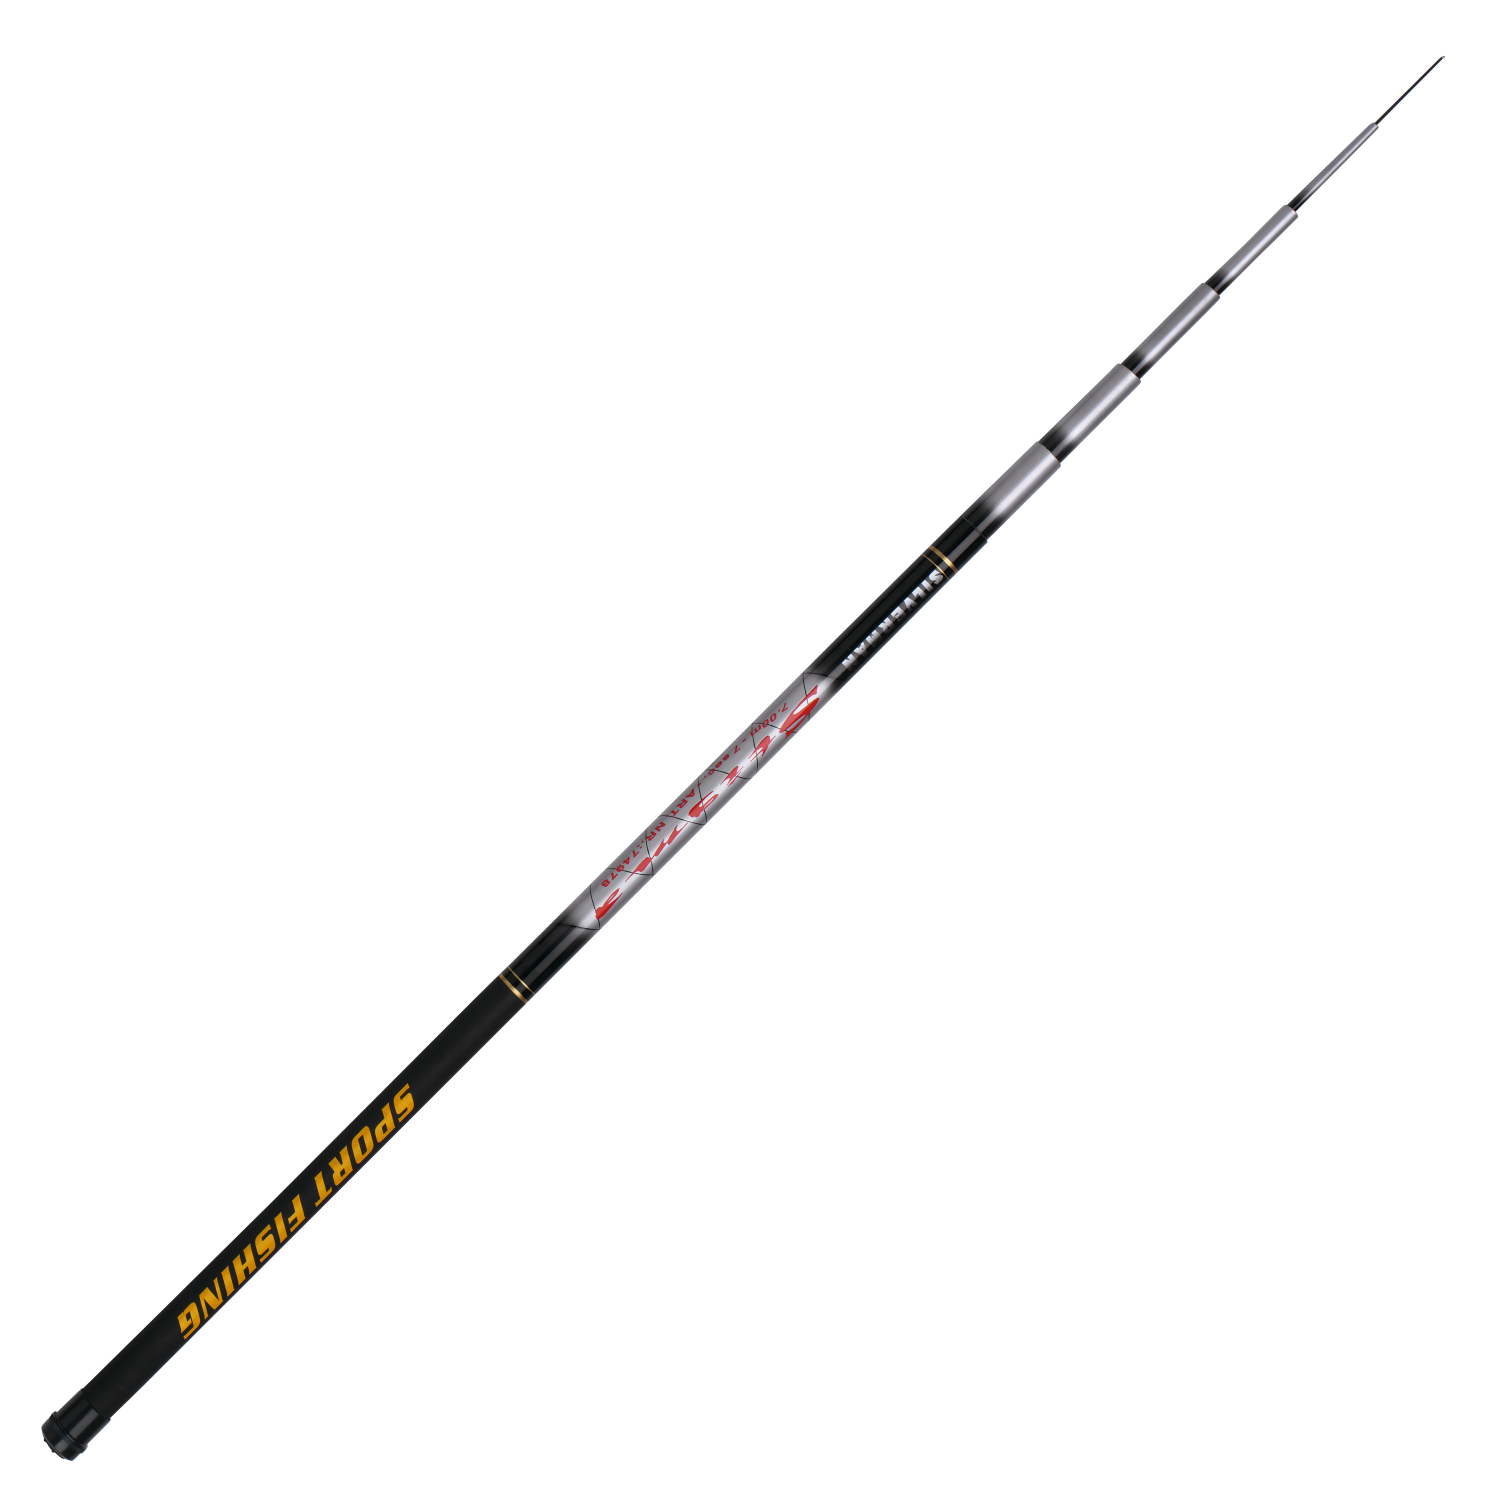 https://images.askari-sport.com/en/product/1/large/silverman-coarse-fishing-rod-stigma-pole.jpg